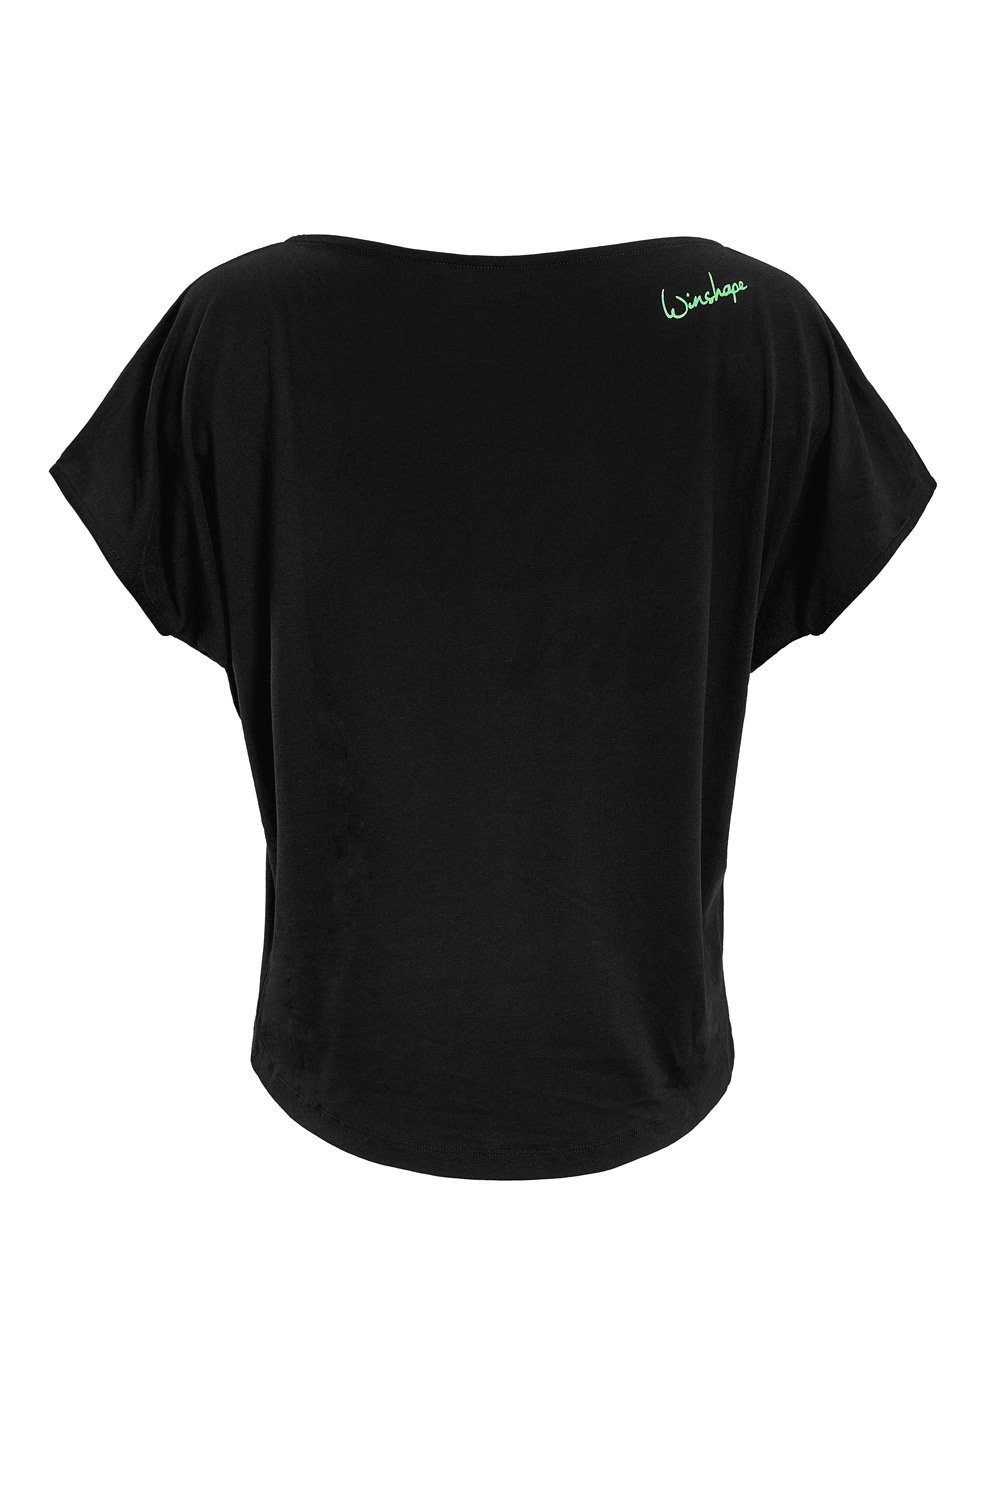 grünem Neon Winshape leicht MCT002 ultra mit Oversize-Shirt Glitzer-Aufdruck